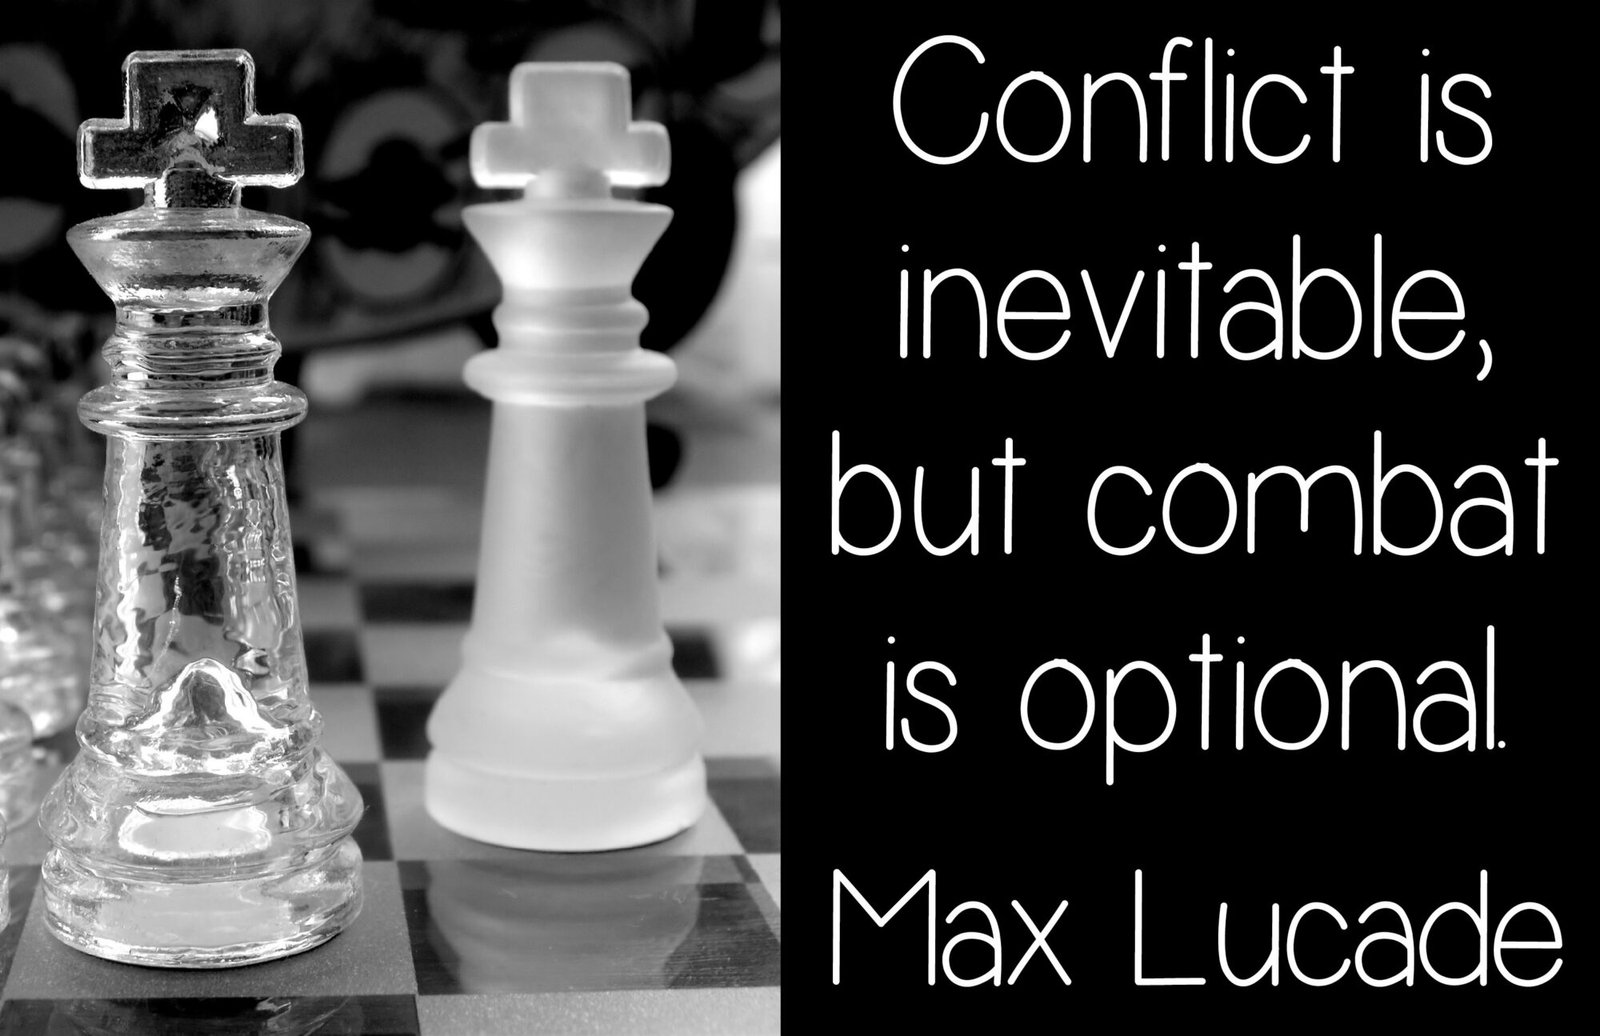 Conflict is inevitable but combat is optional